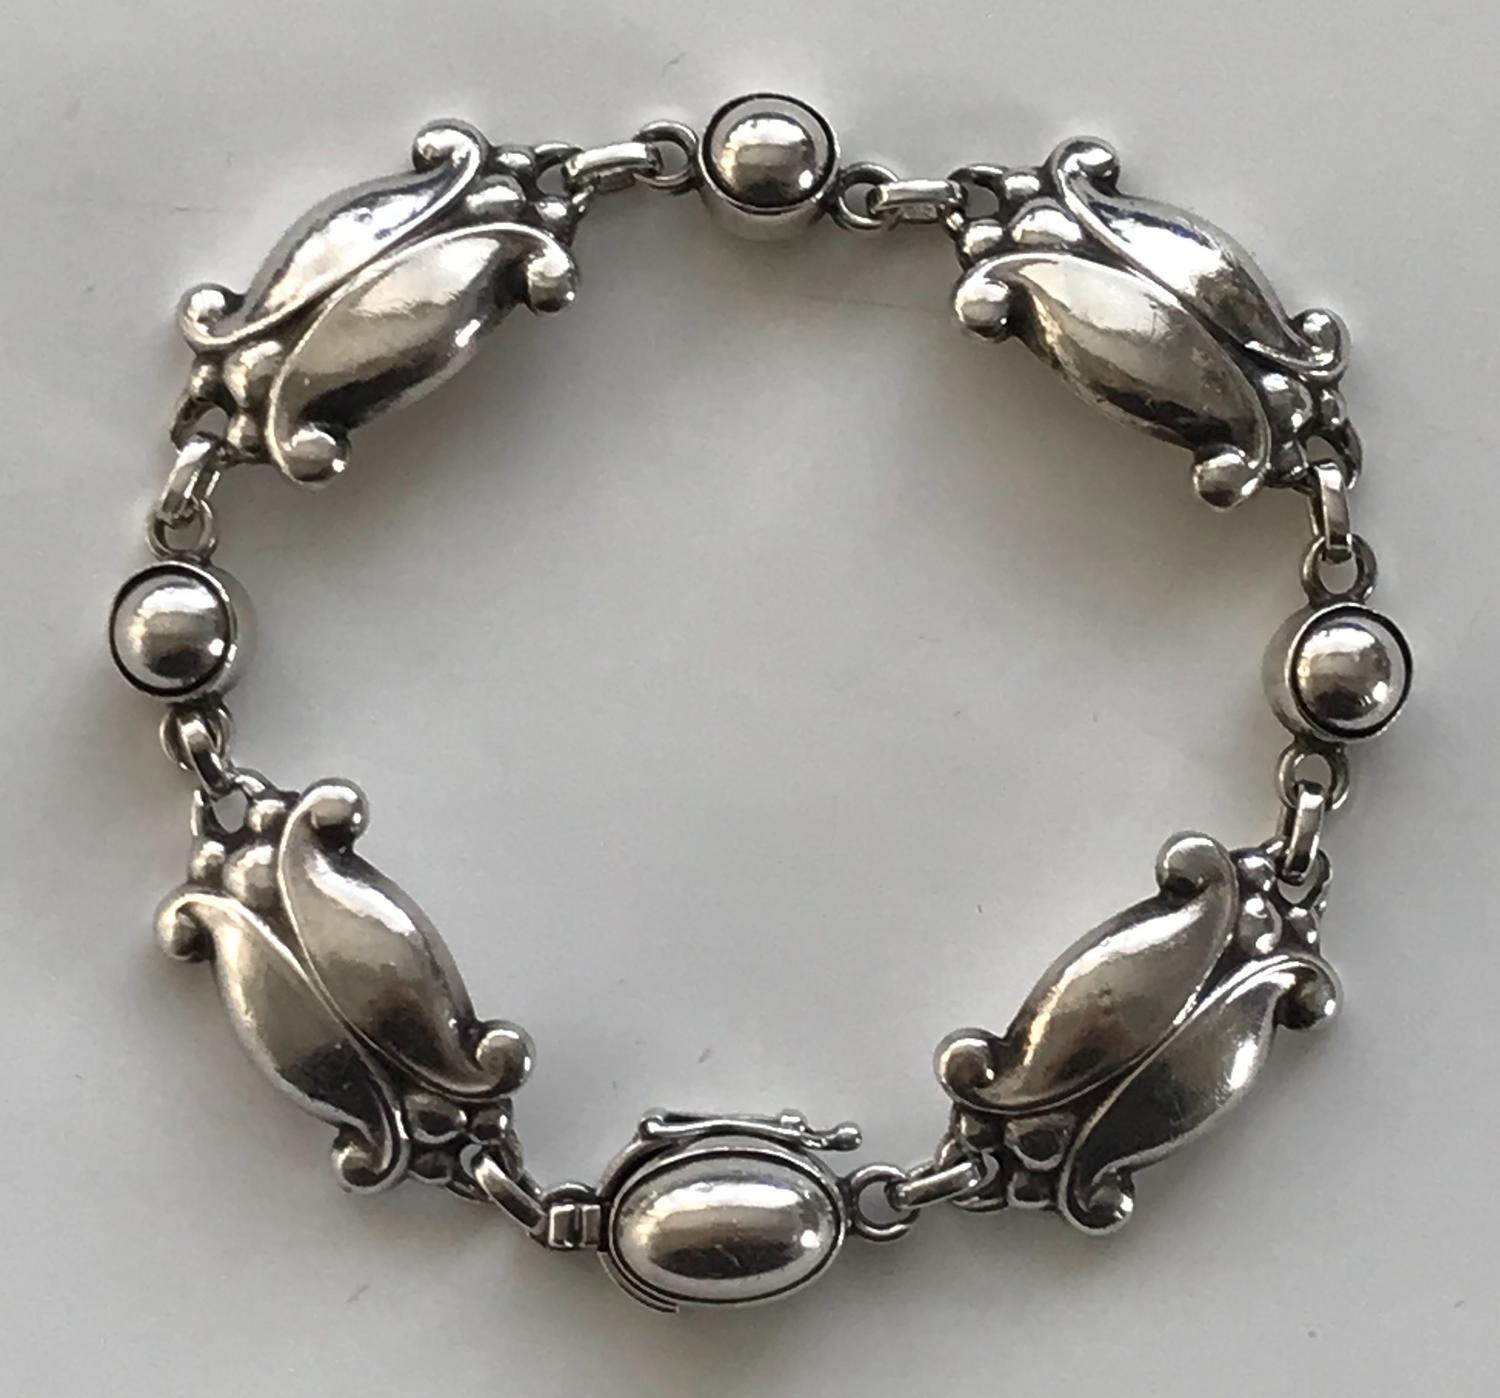 Georg Jensen Moonlight Blossom silver bracelet design no. 11